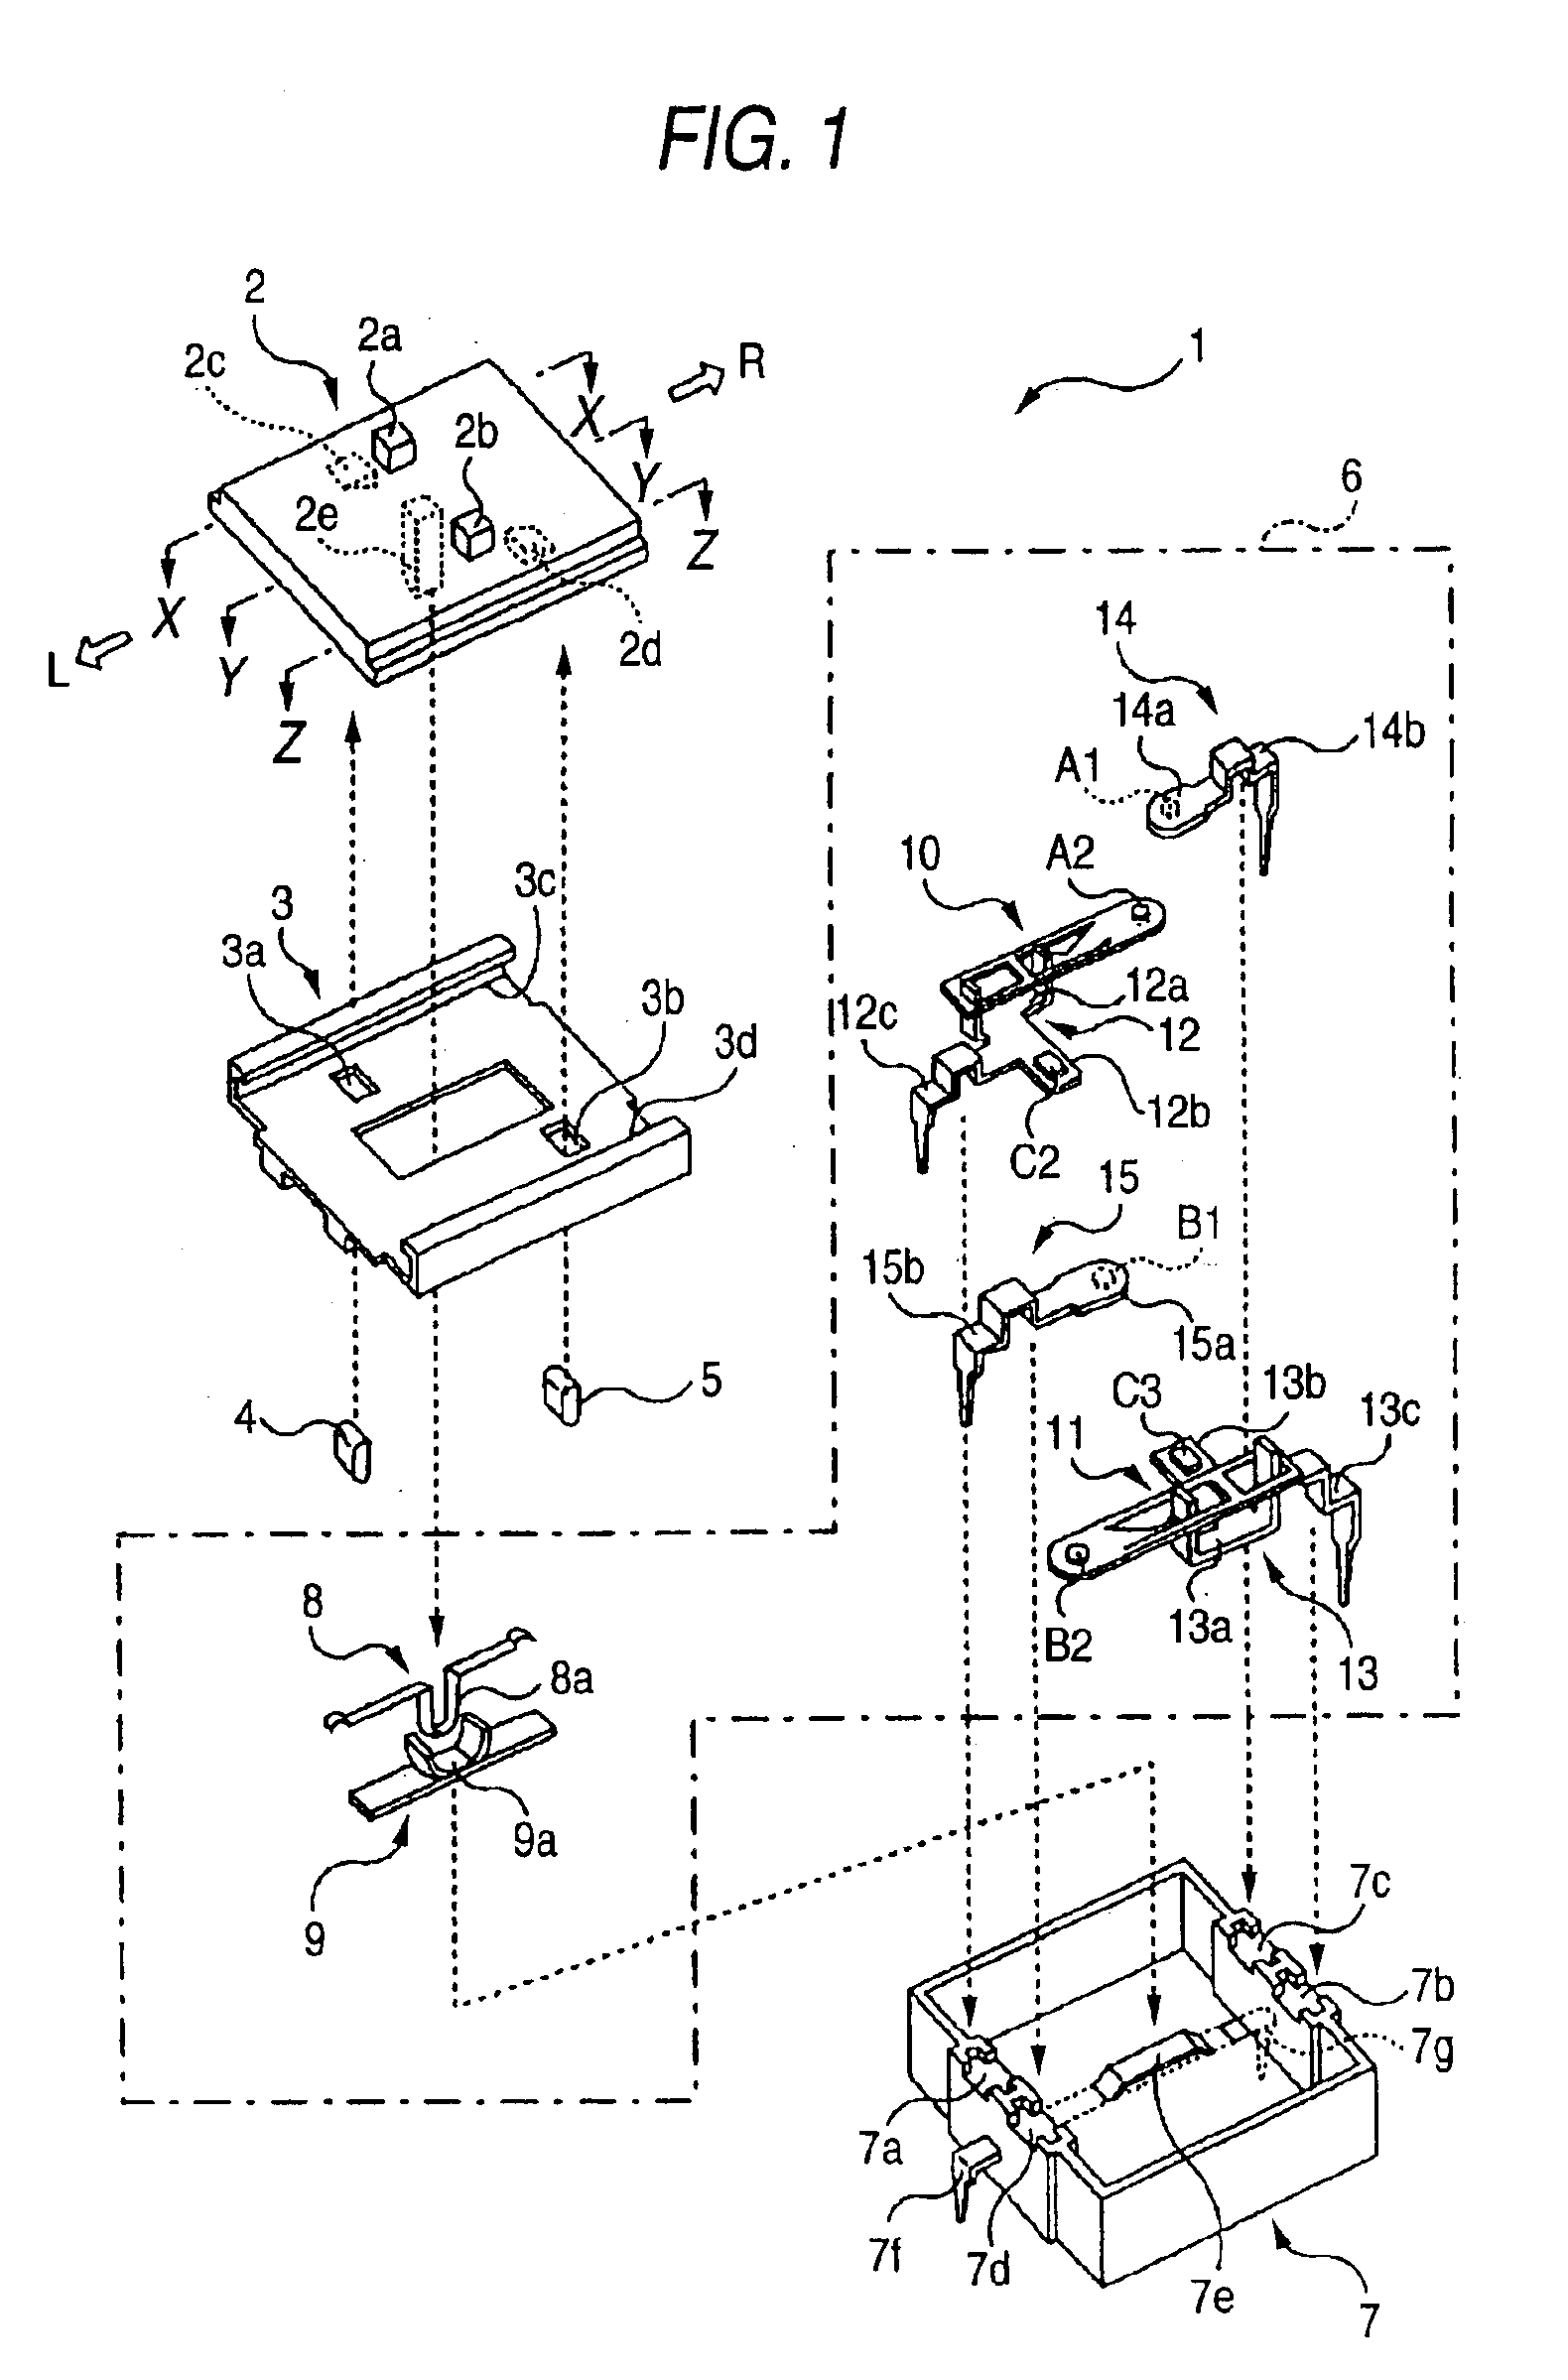 Switch apparatus